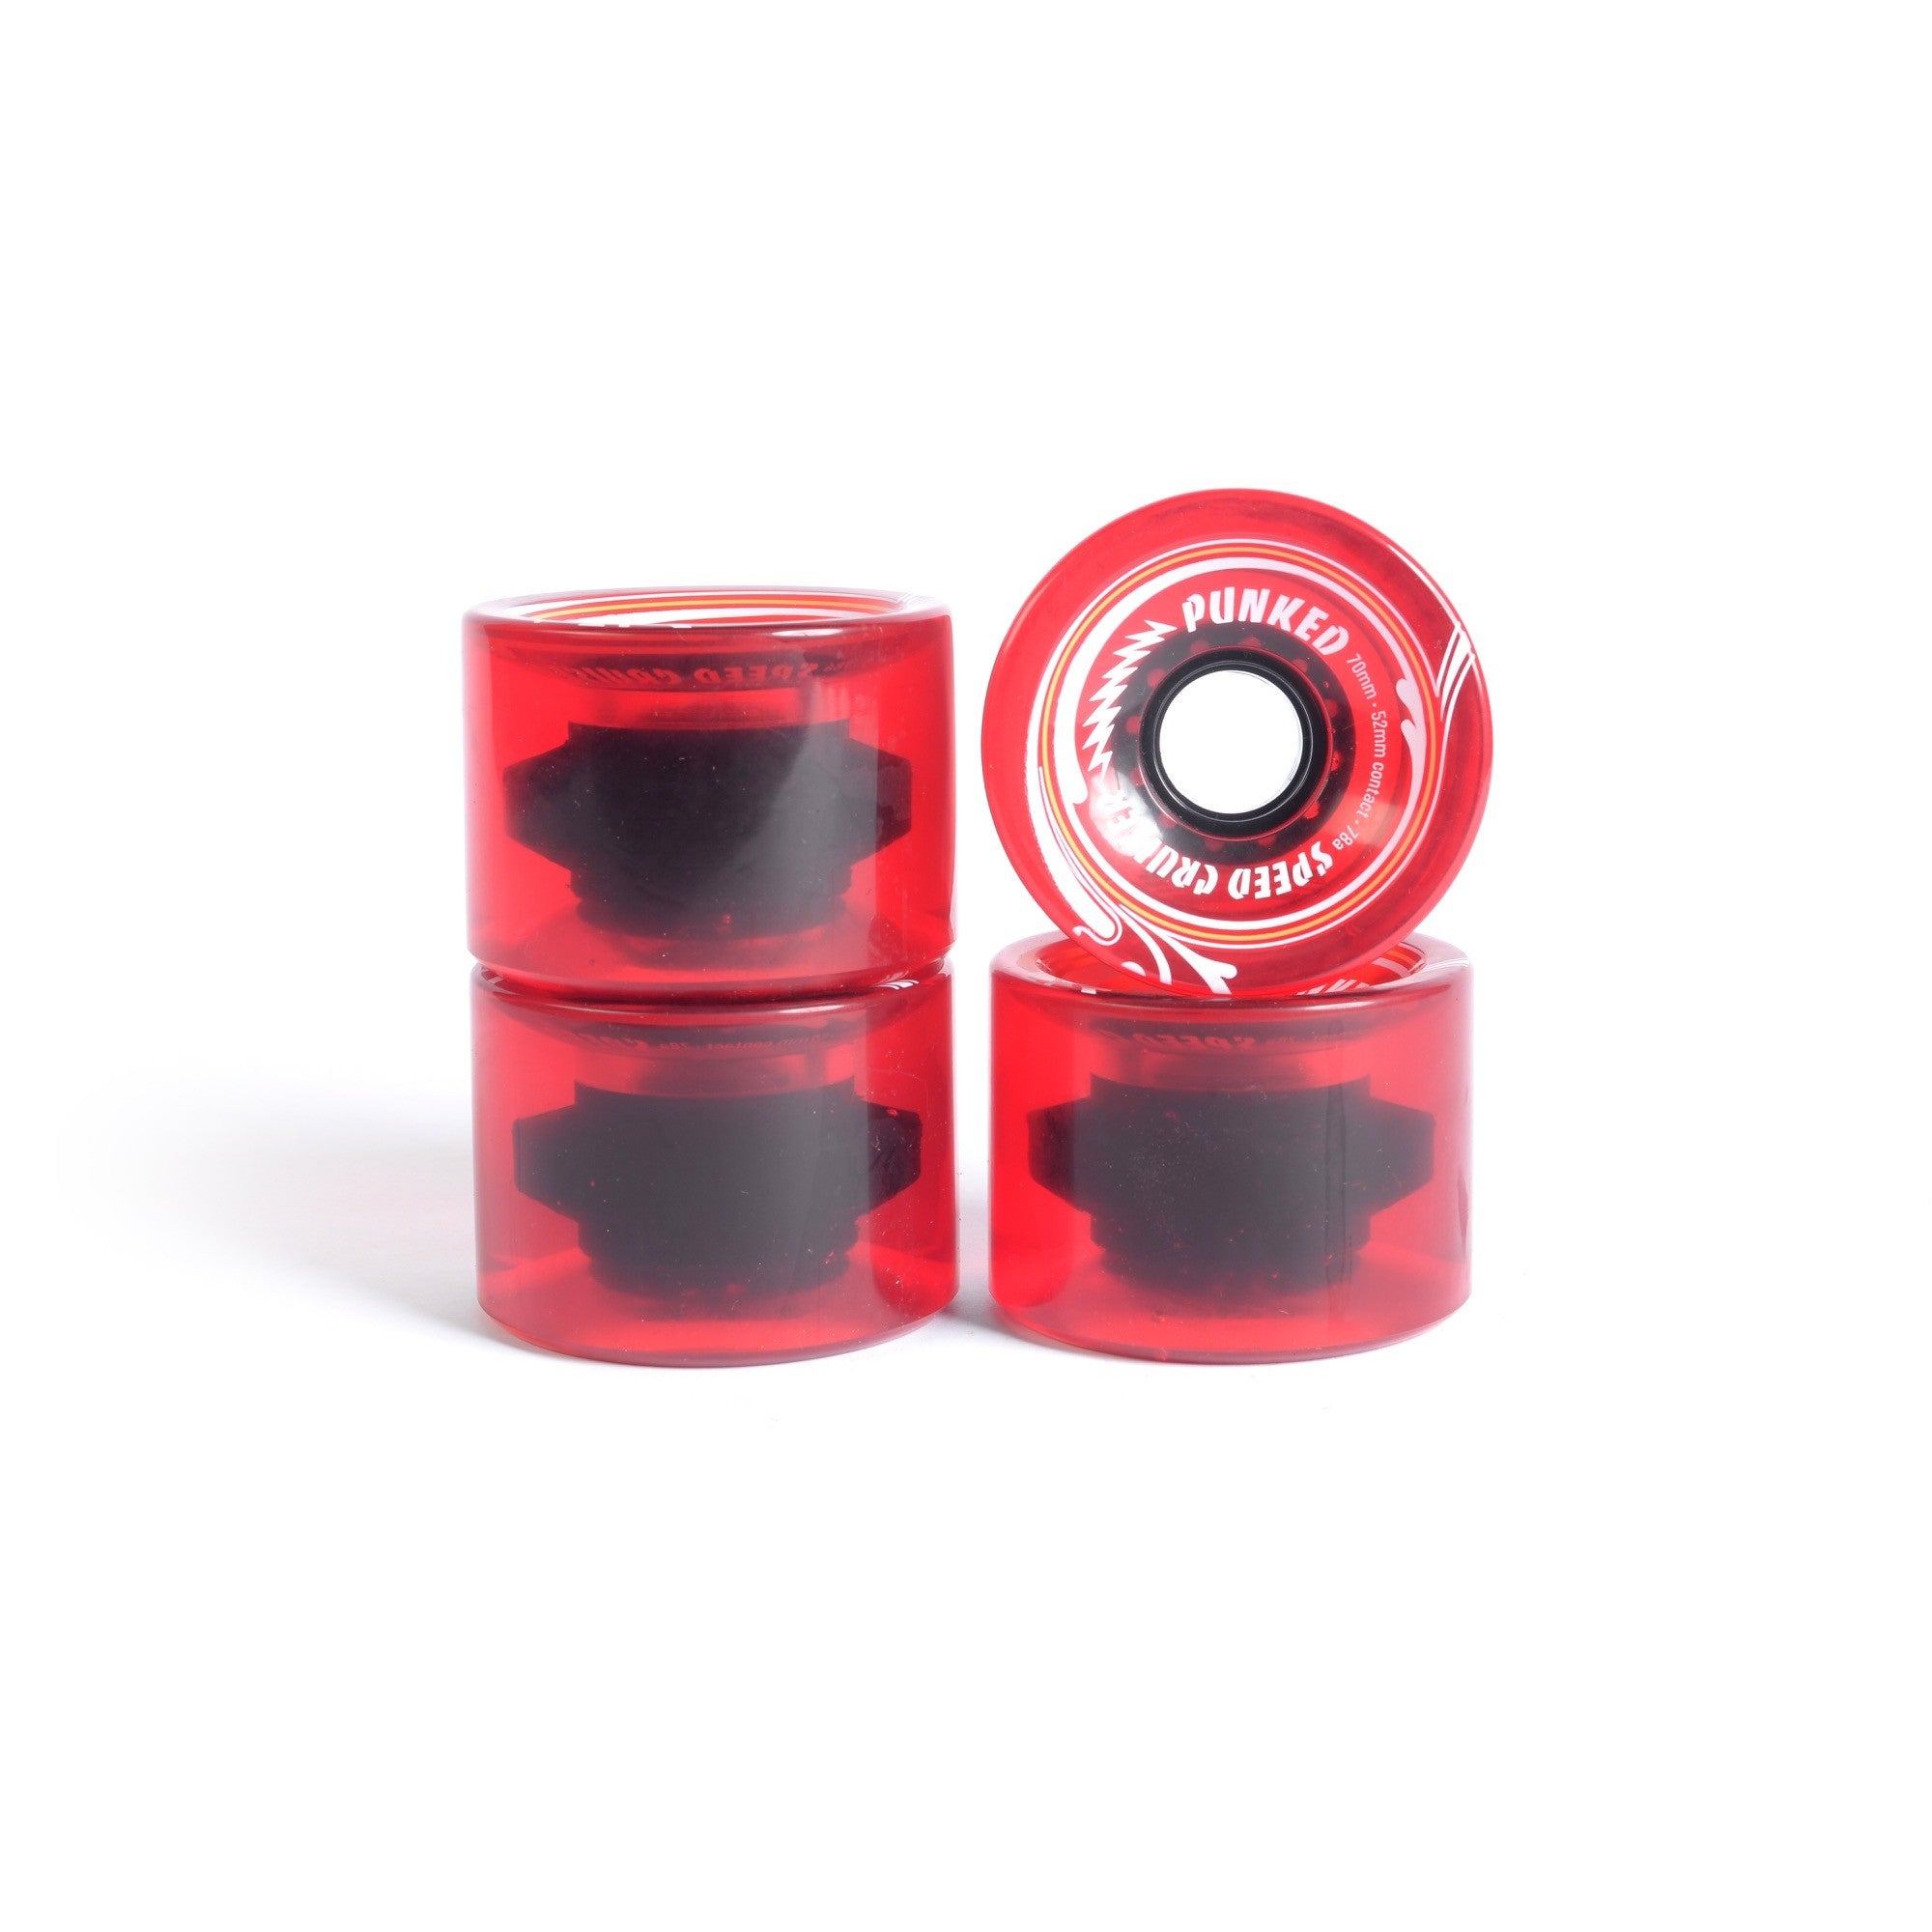 Skateboard wheels - YOCAHER 70x52mm 78a - Translucid Red